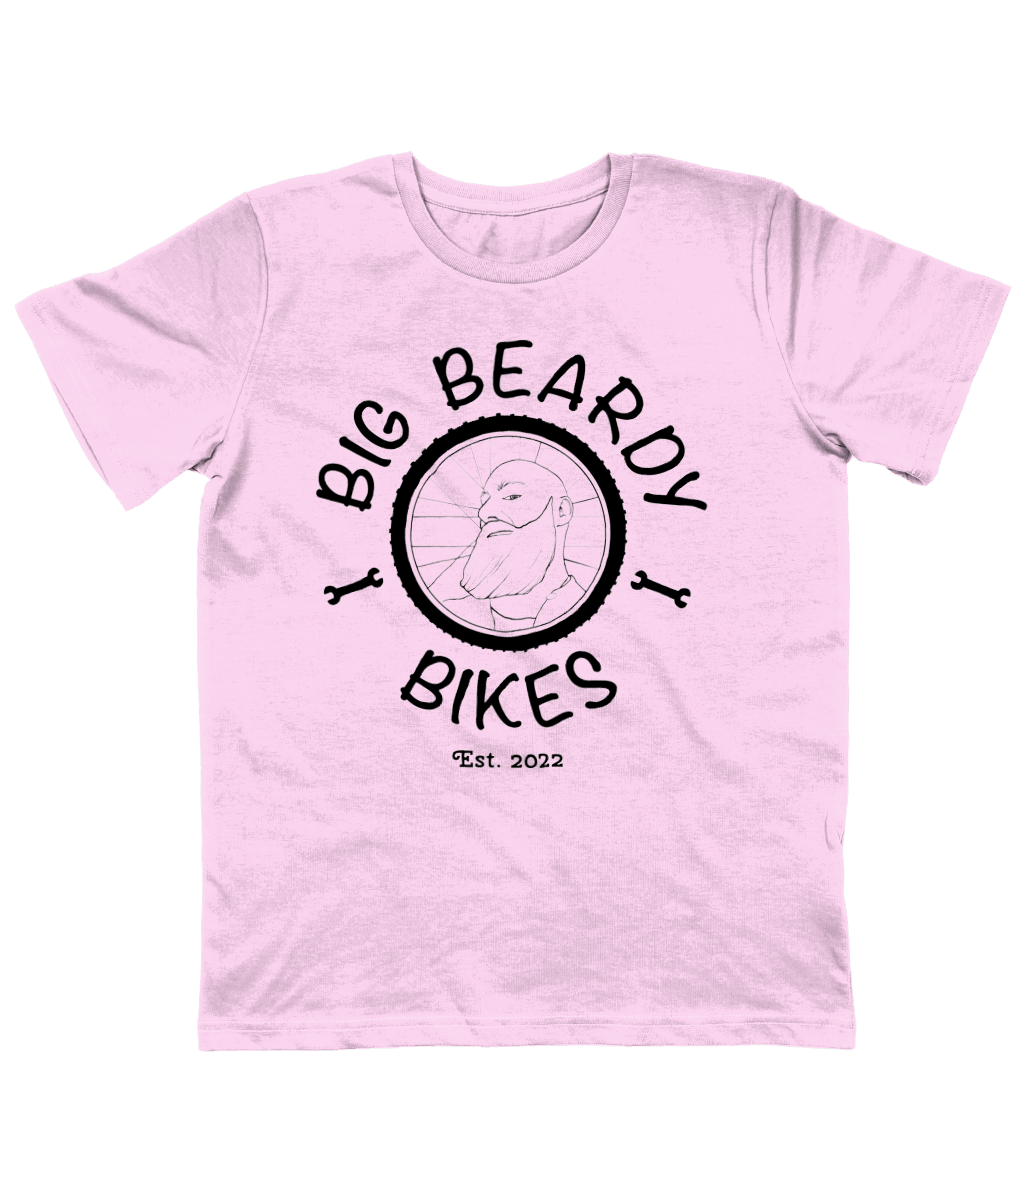 Big beardy bikes bicycle mechanic Junior Classic Jersey T-Shirt sweet lilac - Black Logo